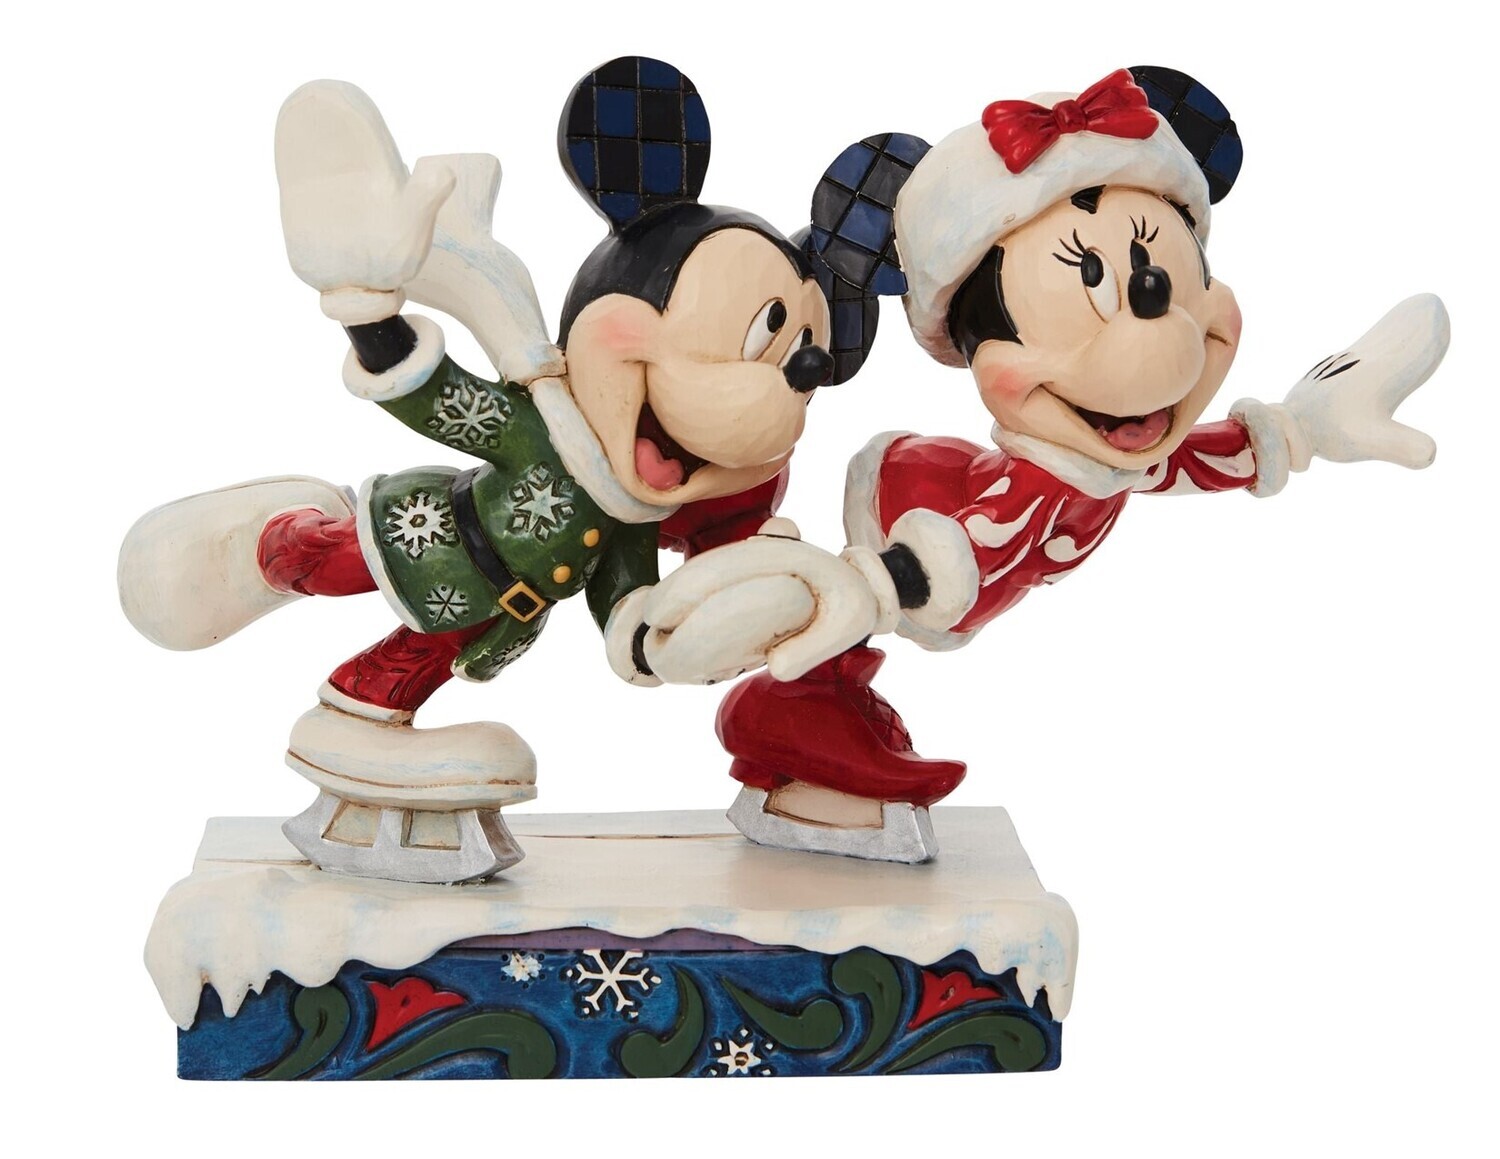 Jim Shore Disney Traditions "Mickey and Minnie Ice Skating” Figurine (6010871)